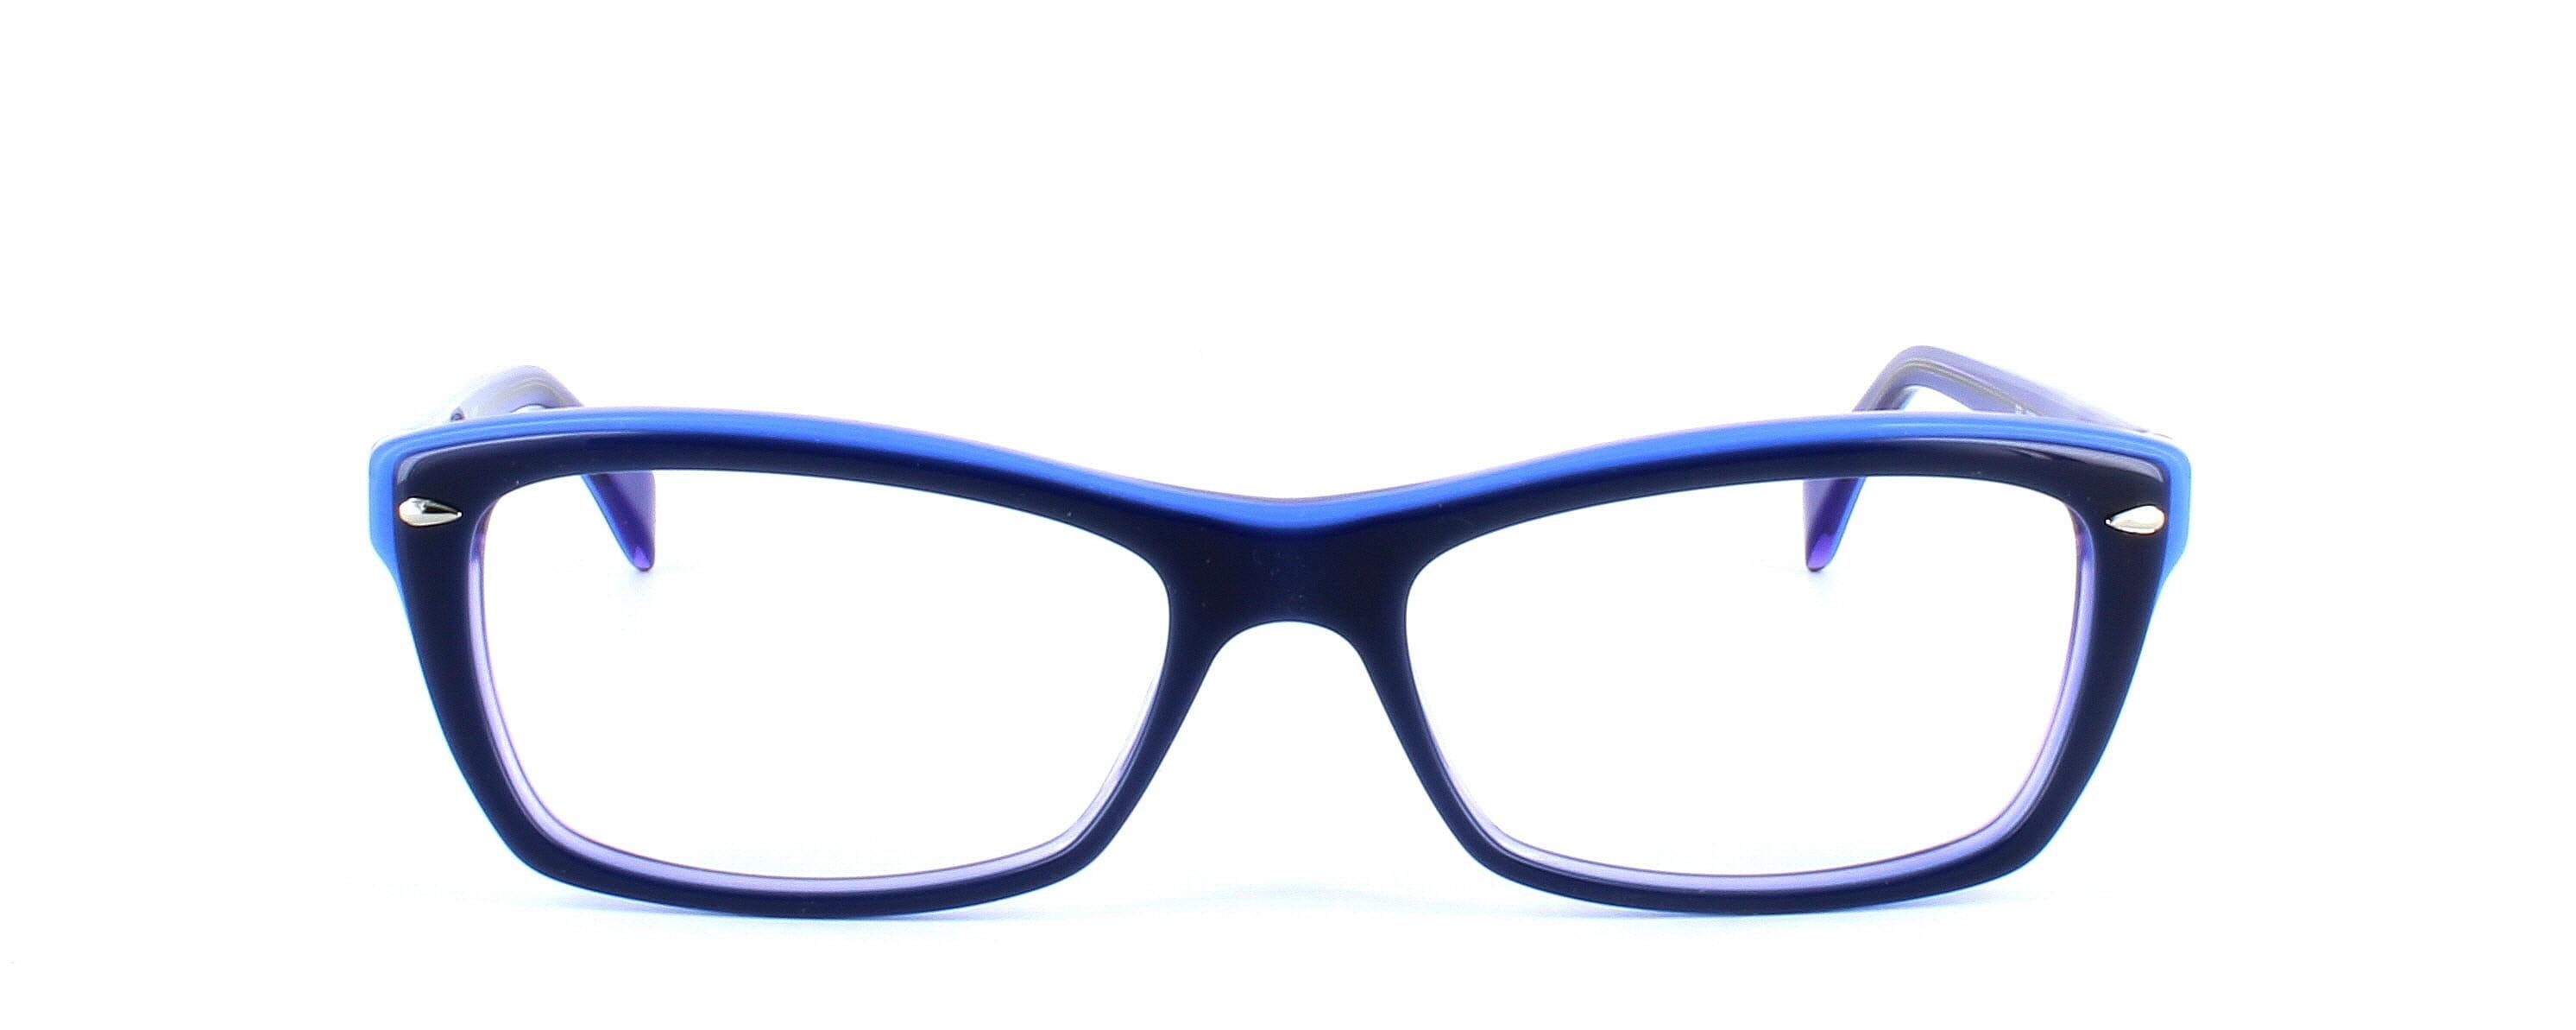 Ray Ban 53641 - 2-Tone blue ladies acetate glasses frame - image view 2